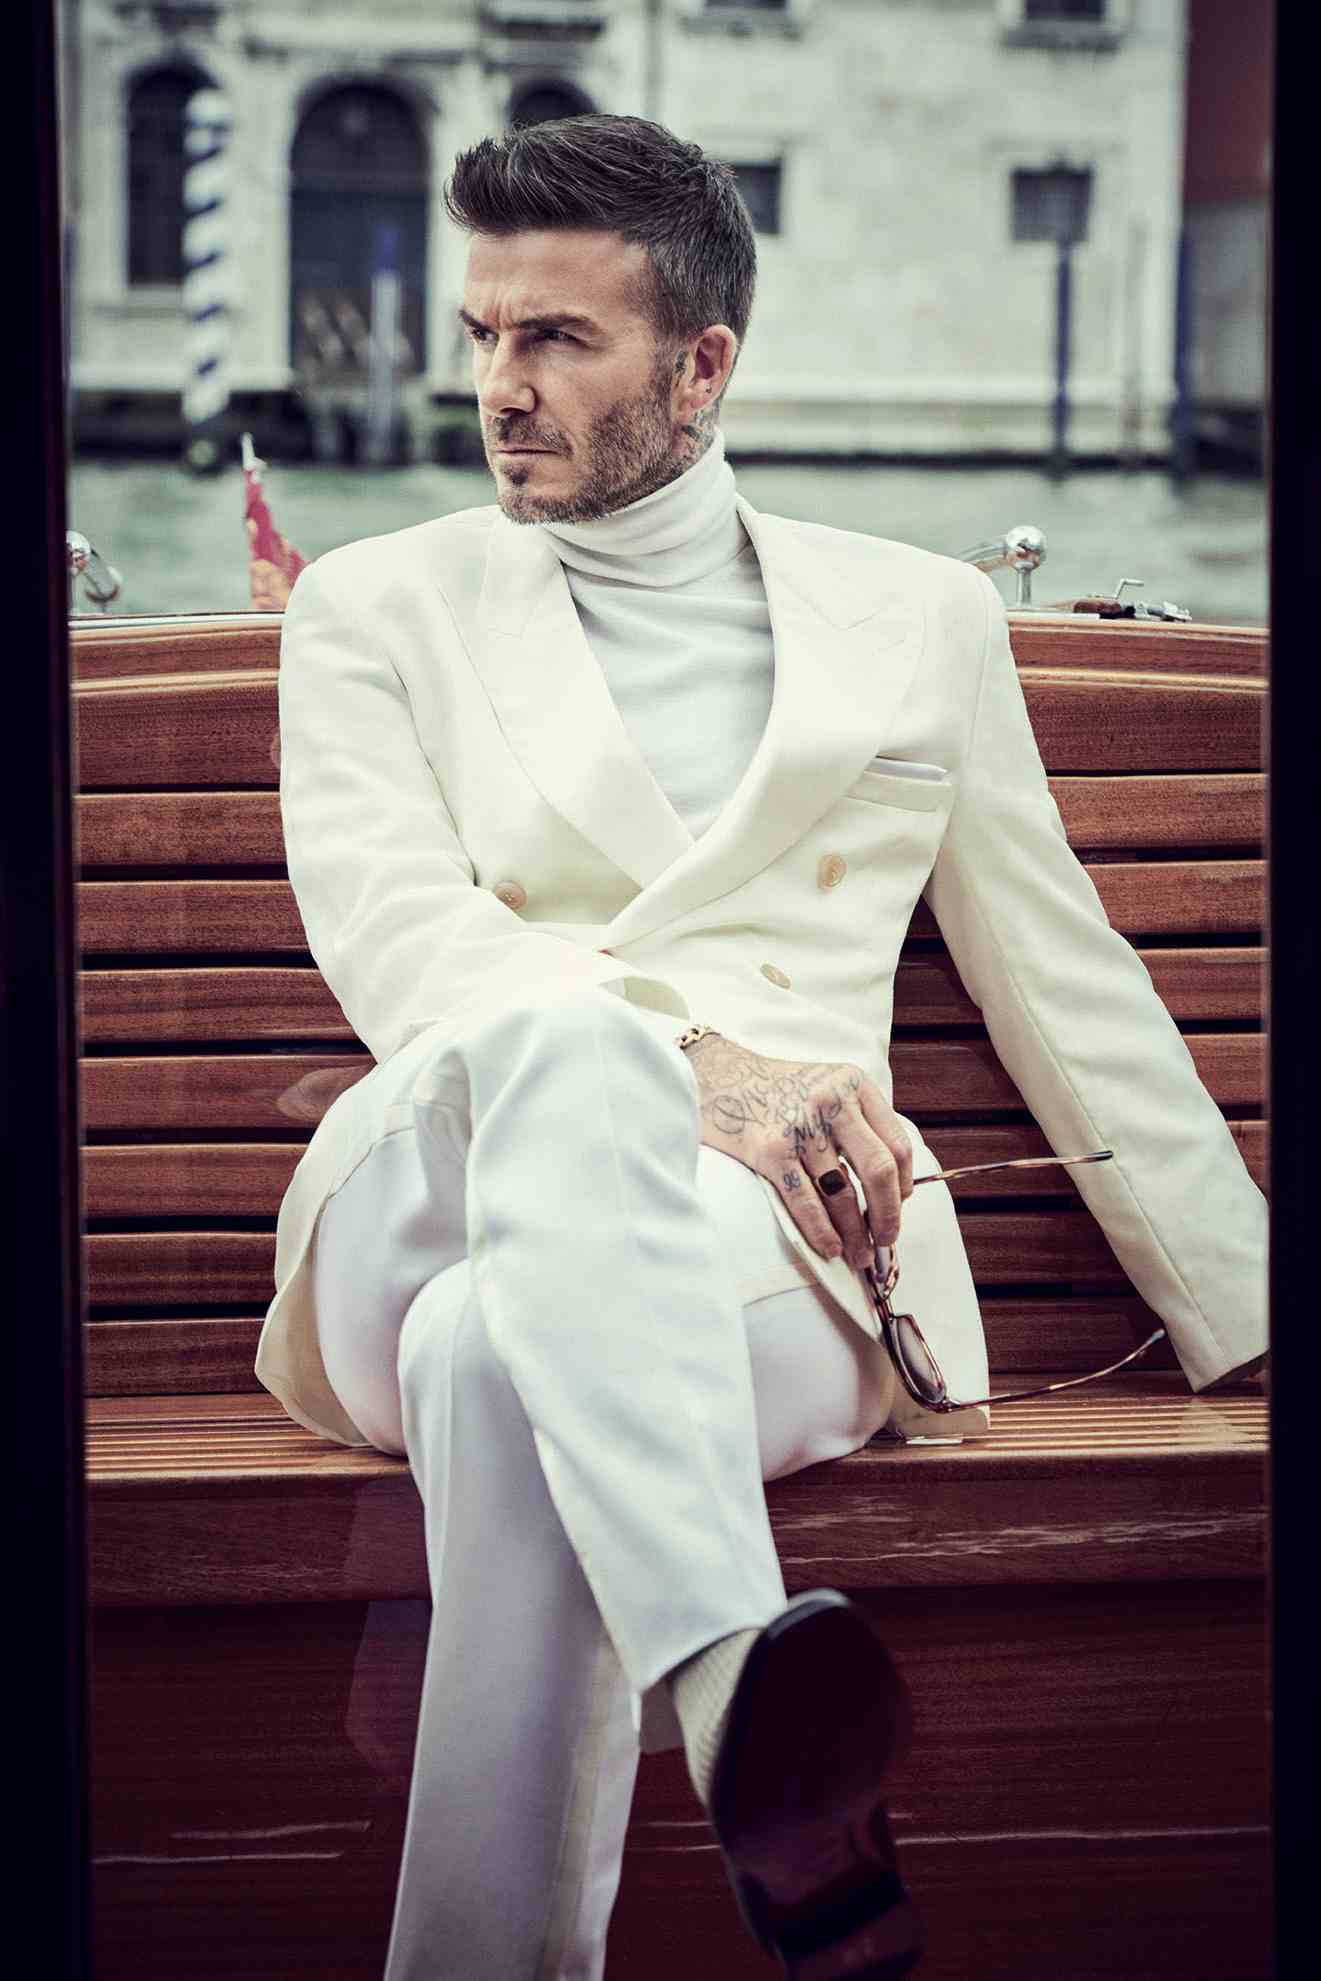 GQ UK - On location in Venice with David Beckham
Photographer: Matthew Brookes
Model: David Beckham
Stylist: Cathy Kasterine
Location: Venice, Italy